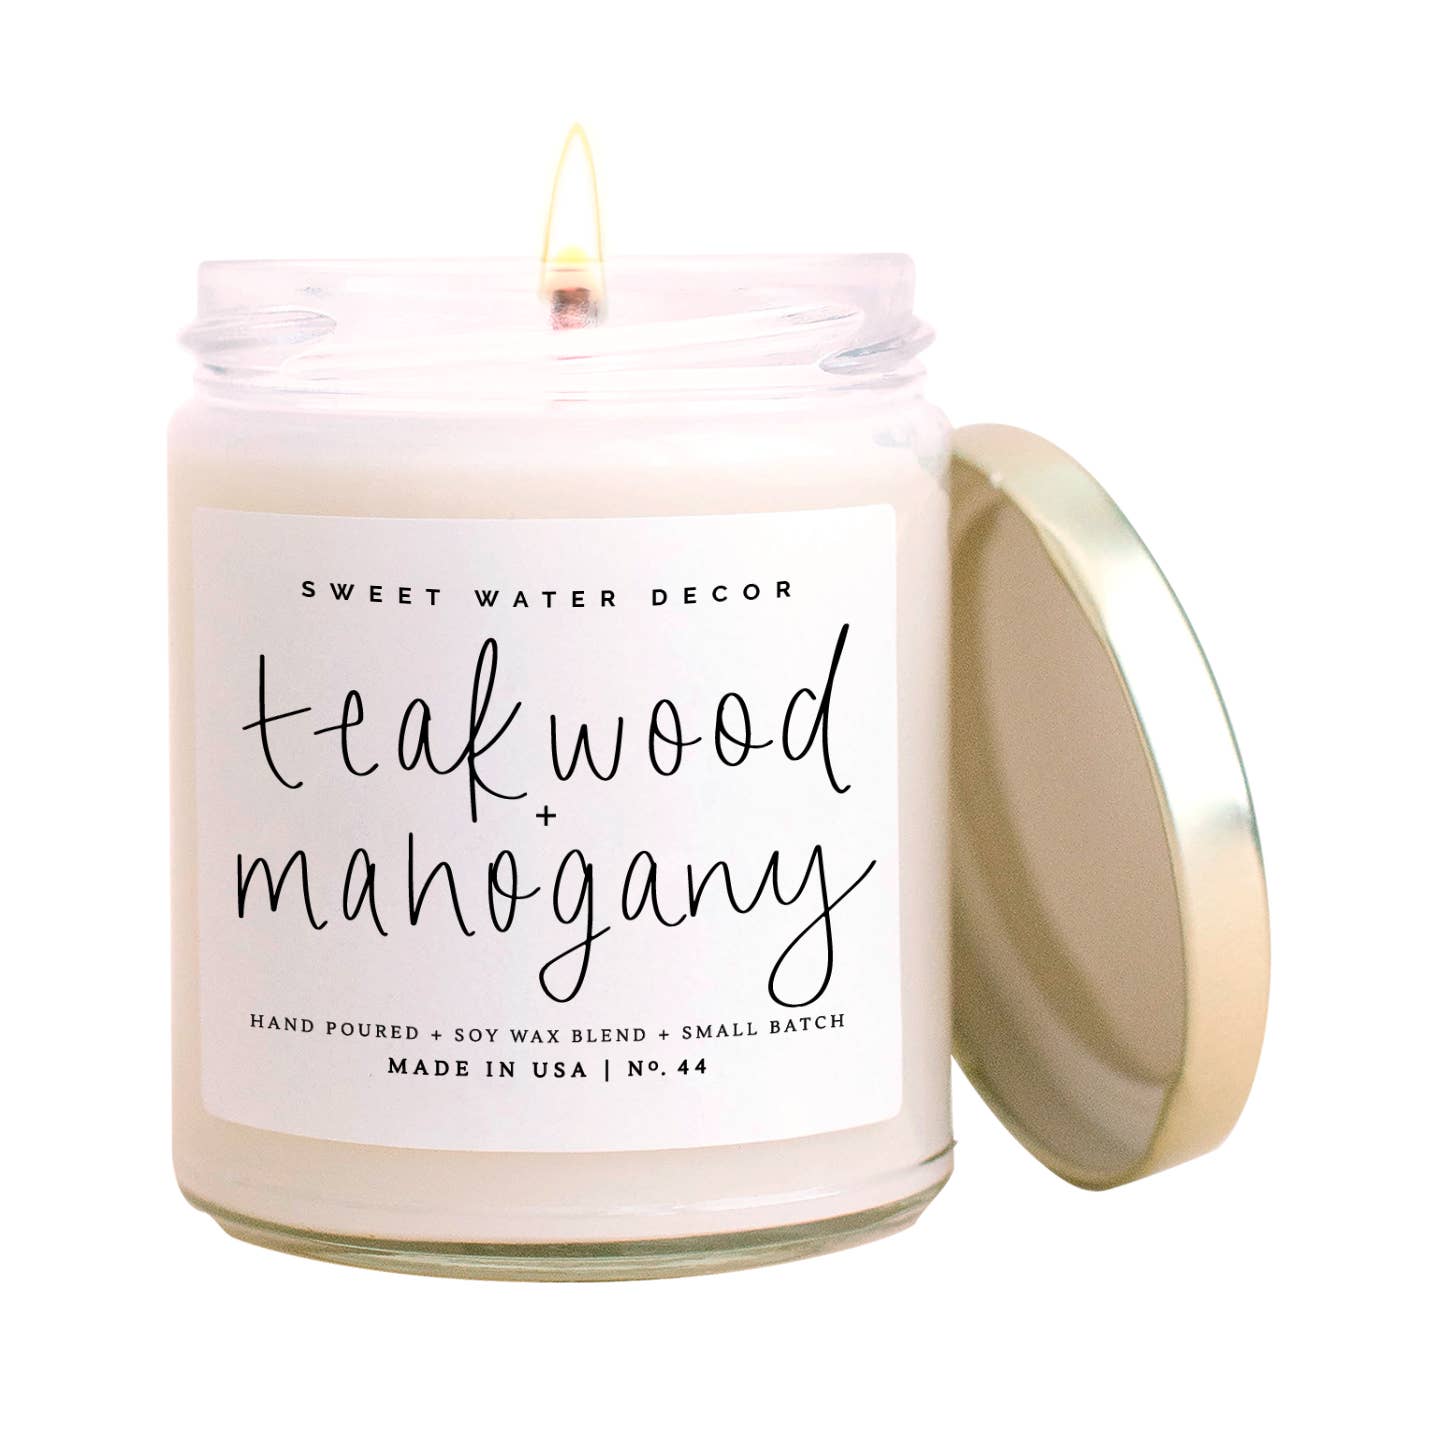 Teakwood and Mahogany Soy Candle 11 oz